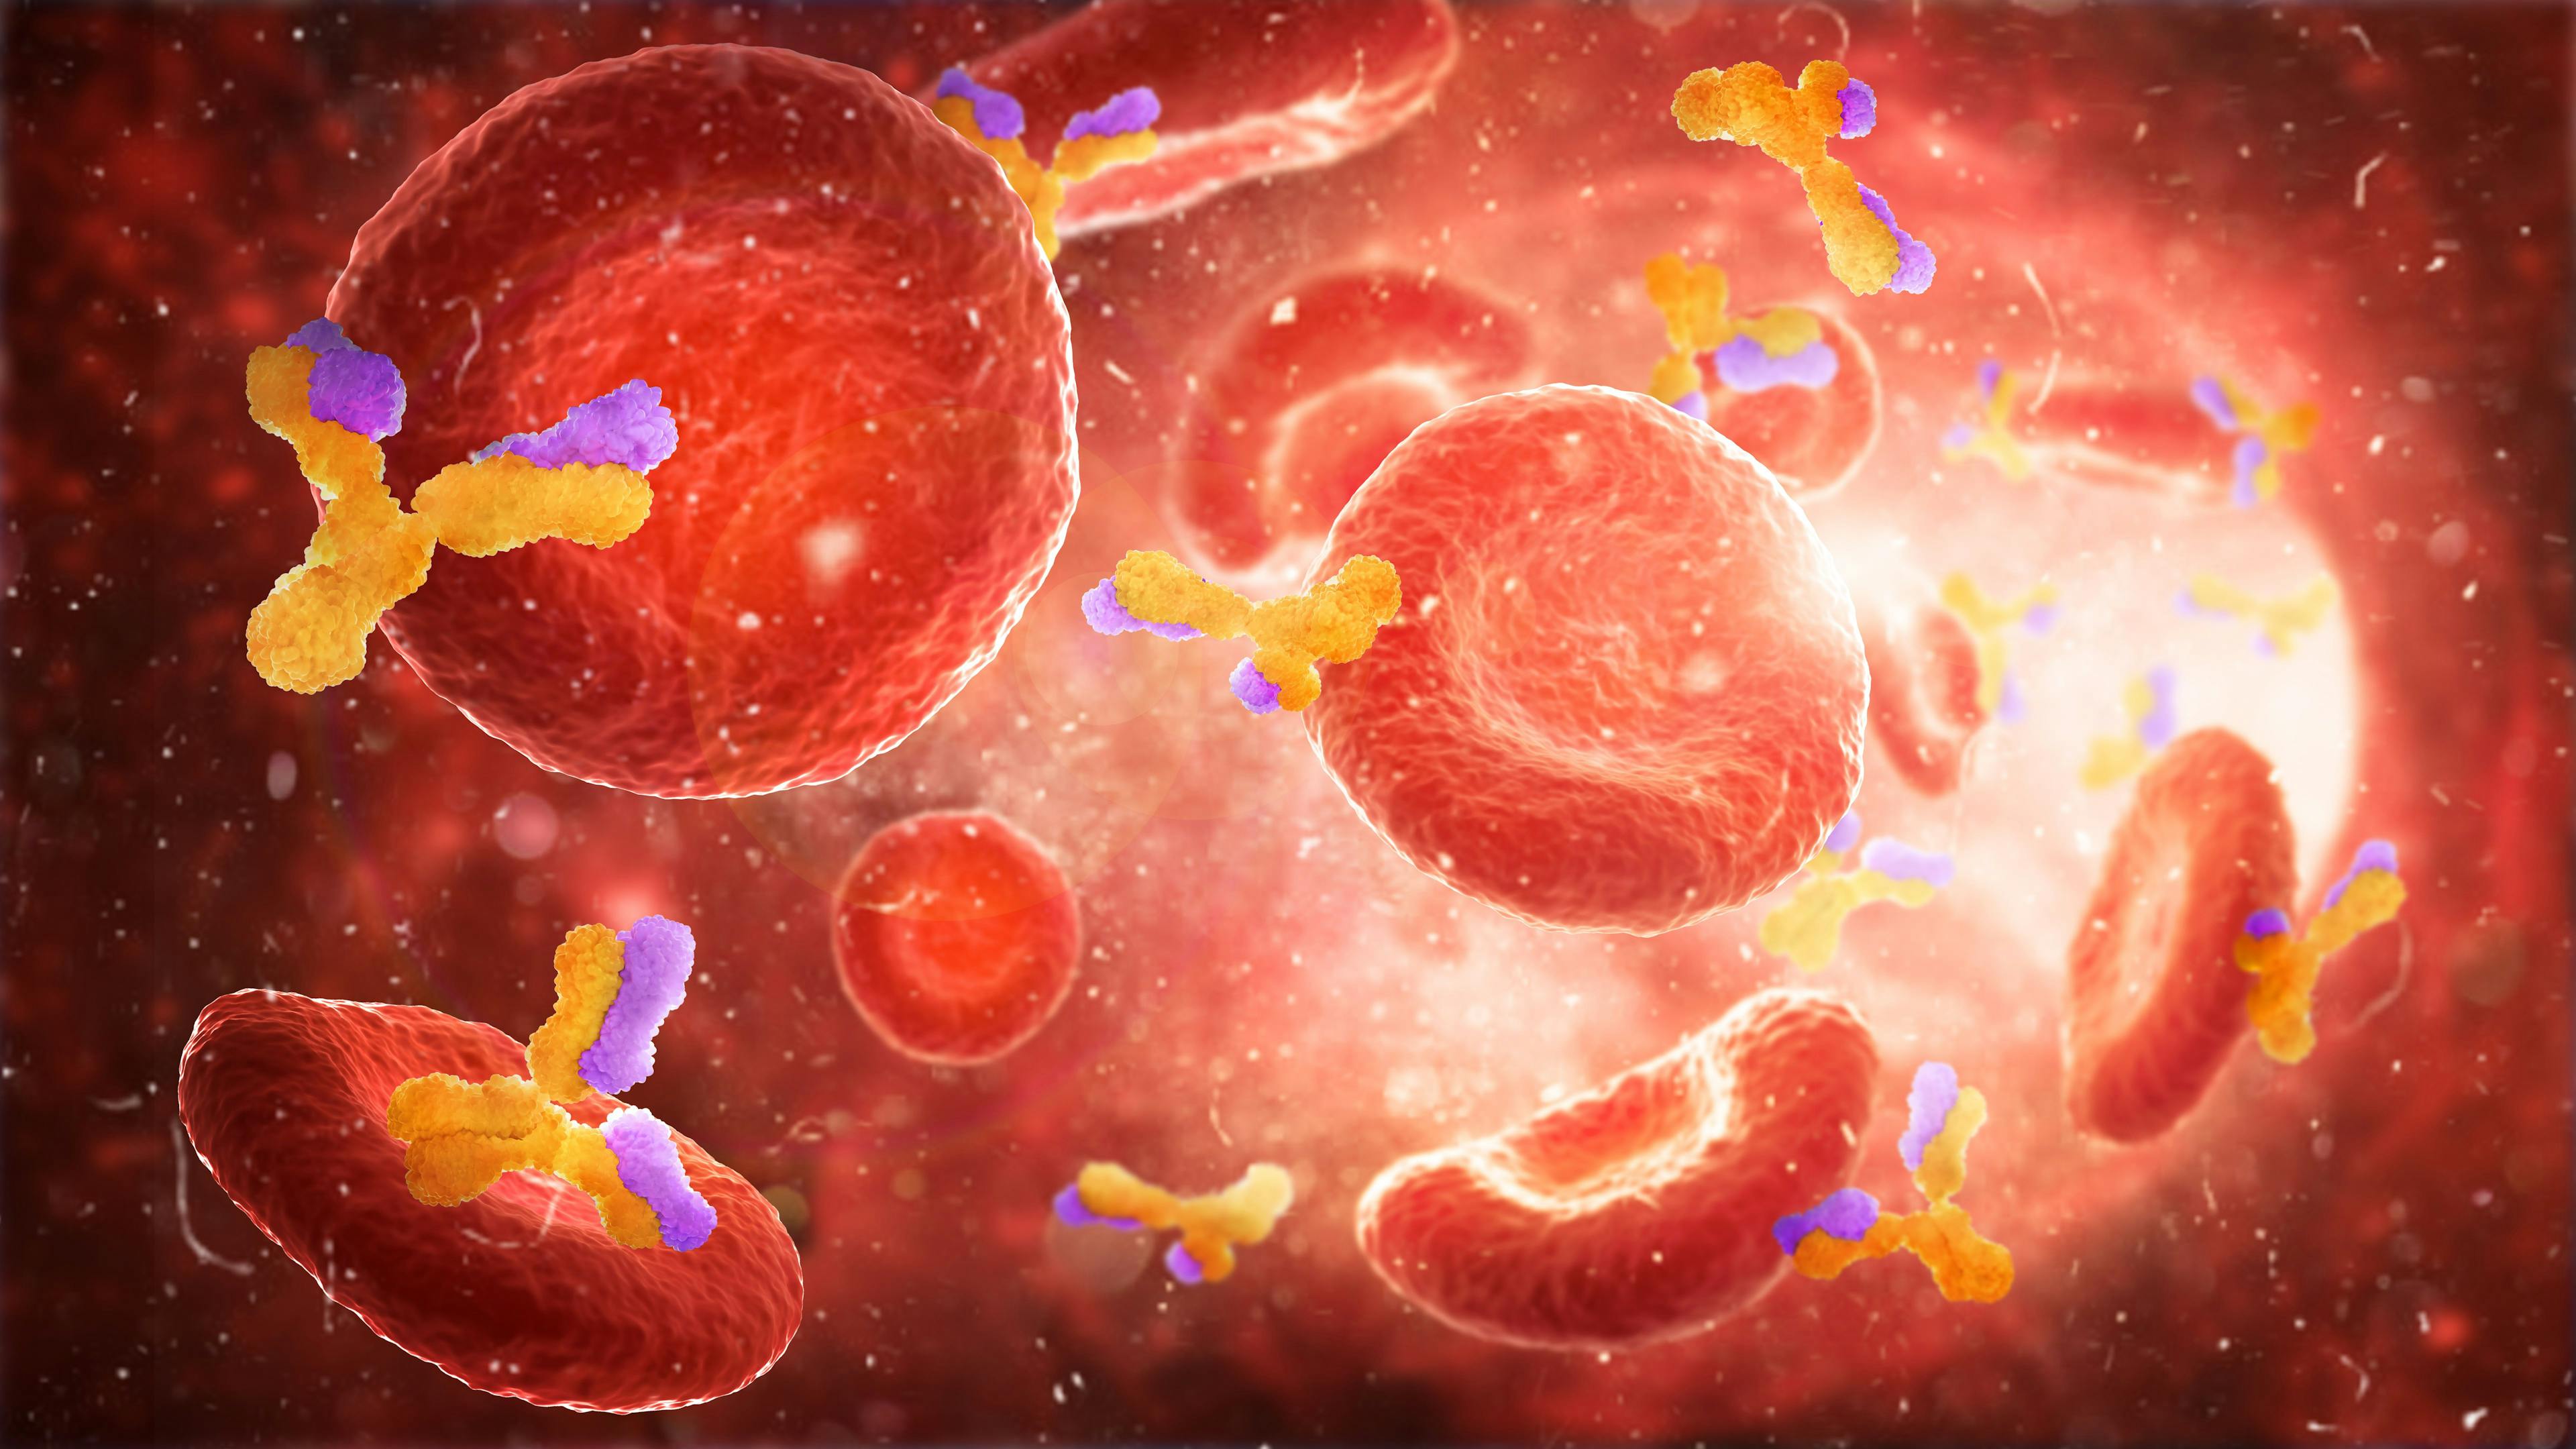 Immune Cells and Antibodies Concept | image credit: vipman4 - stock.adobe.com